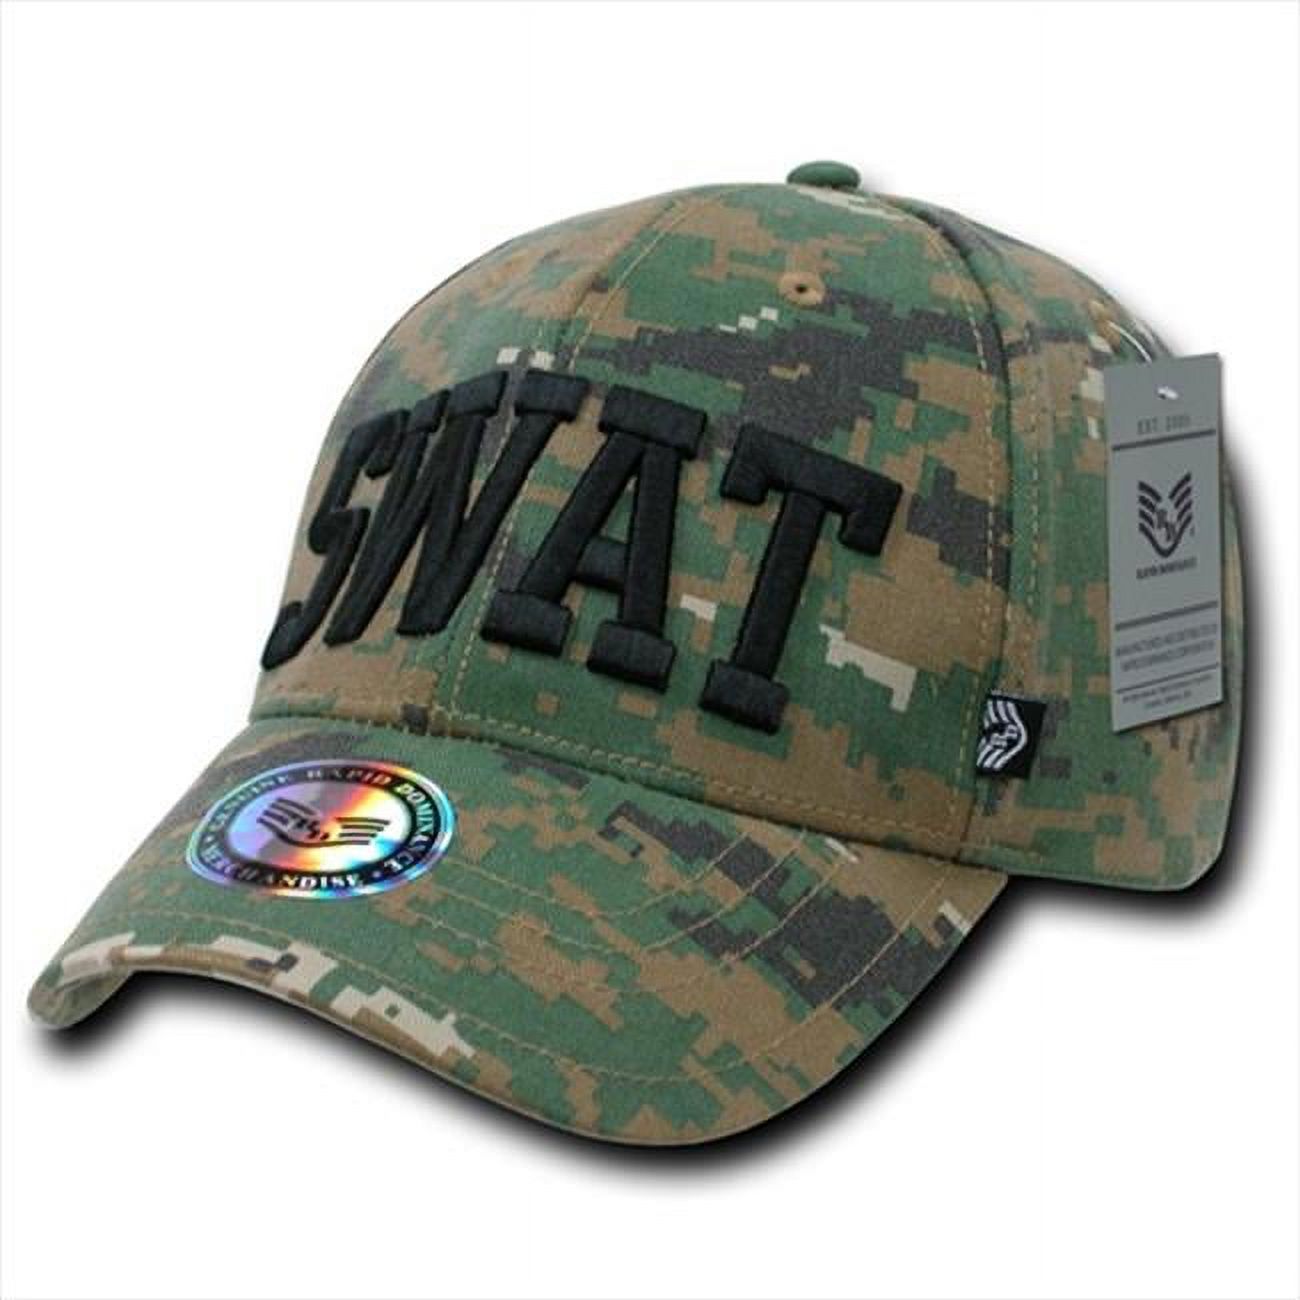 Rapid Dominance 943-SWAT Digital Military -Law Caps - Swat - image 1 of 3